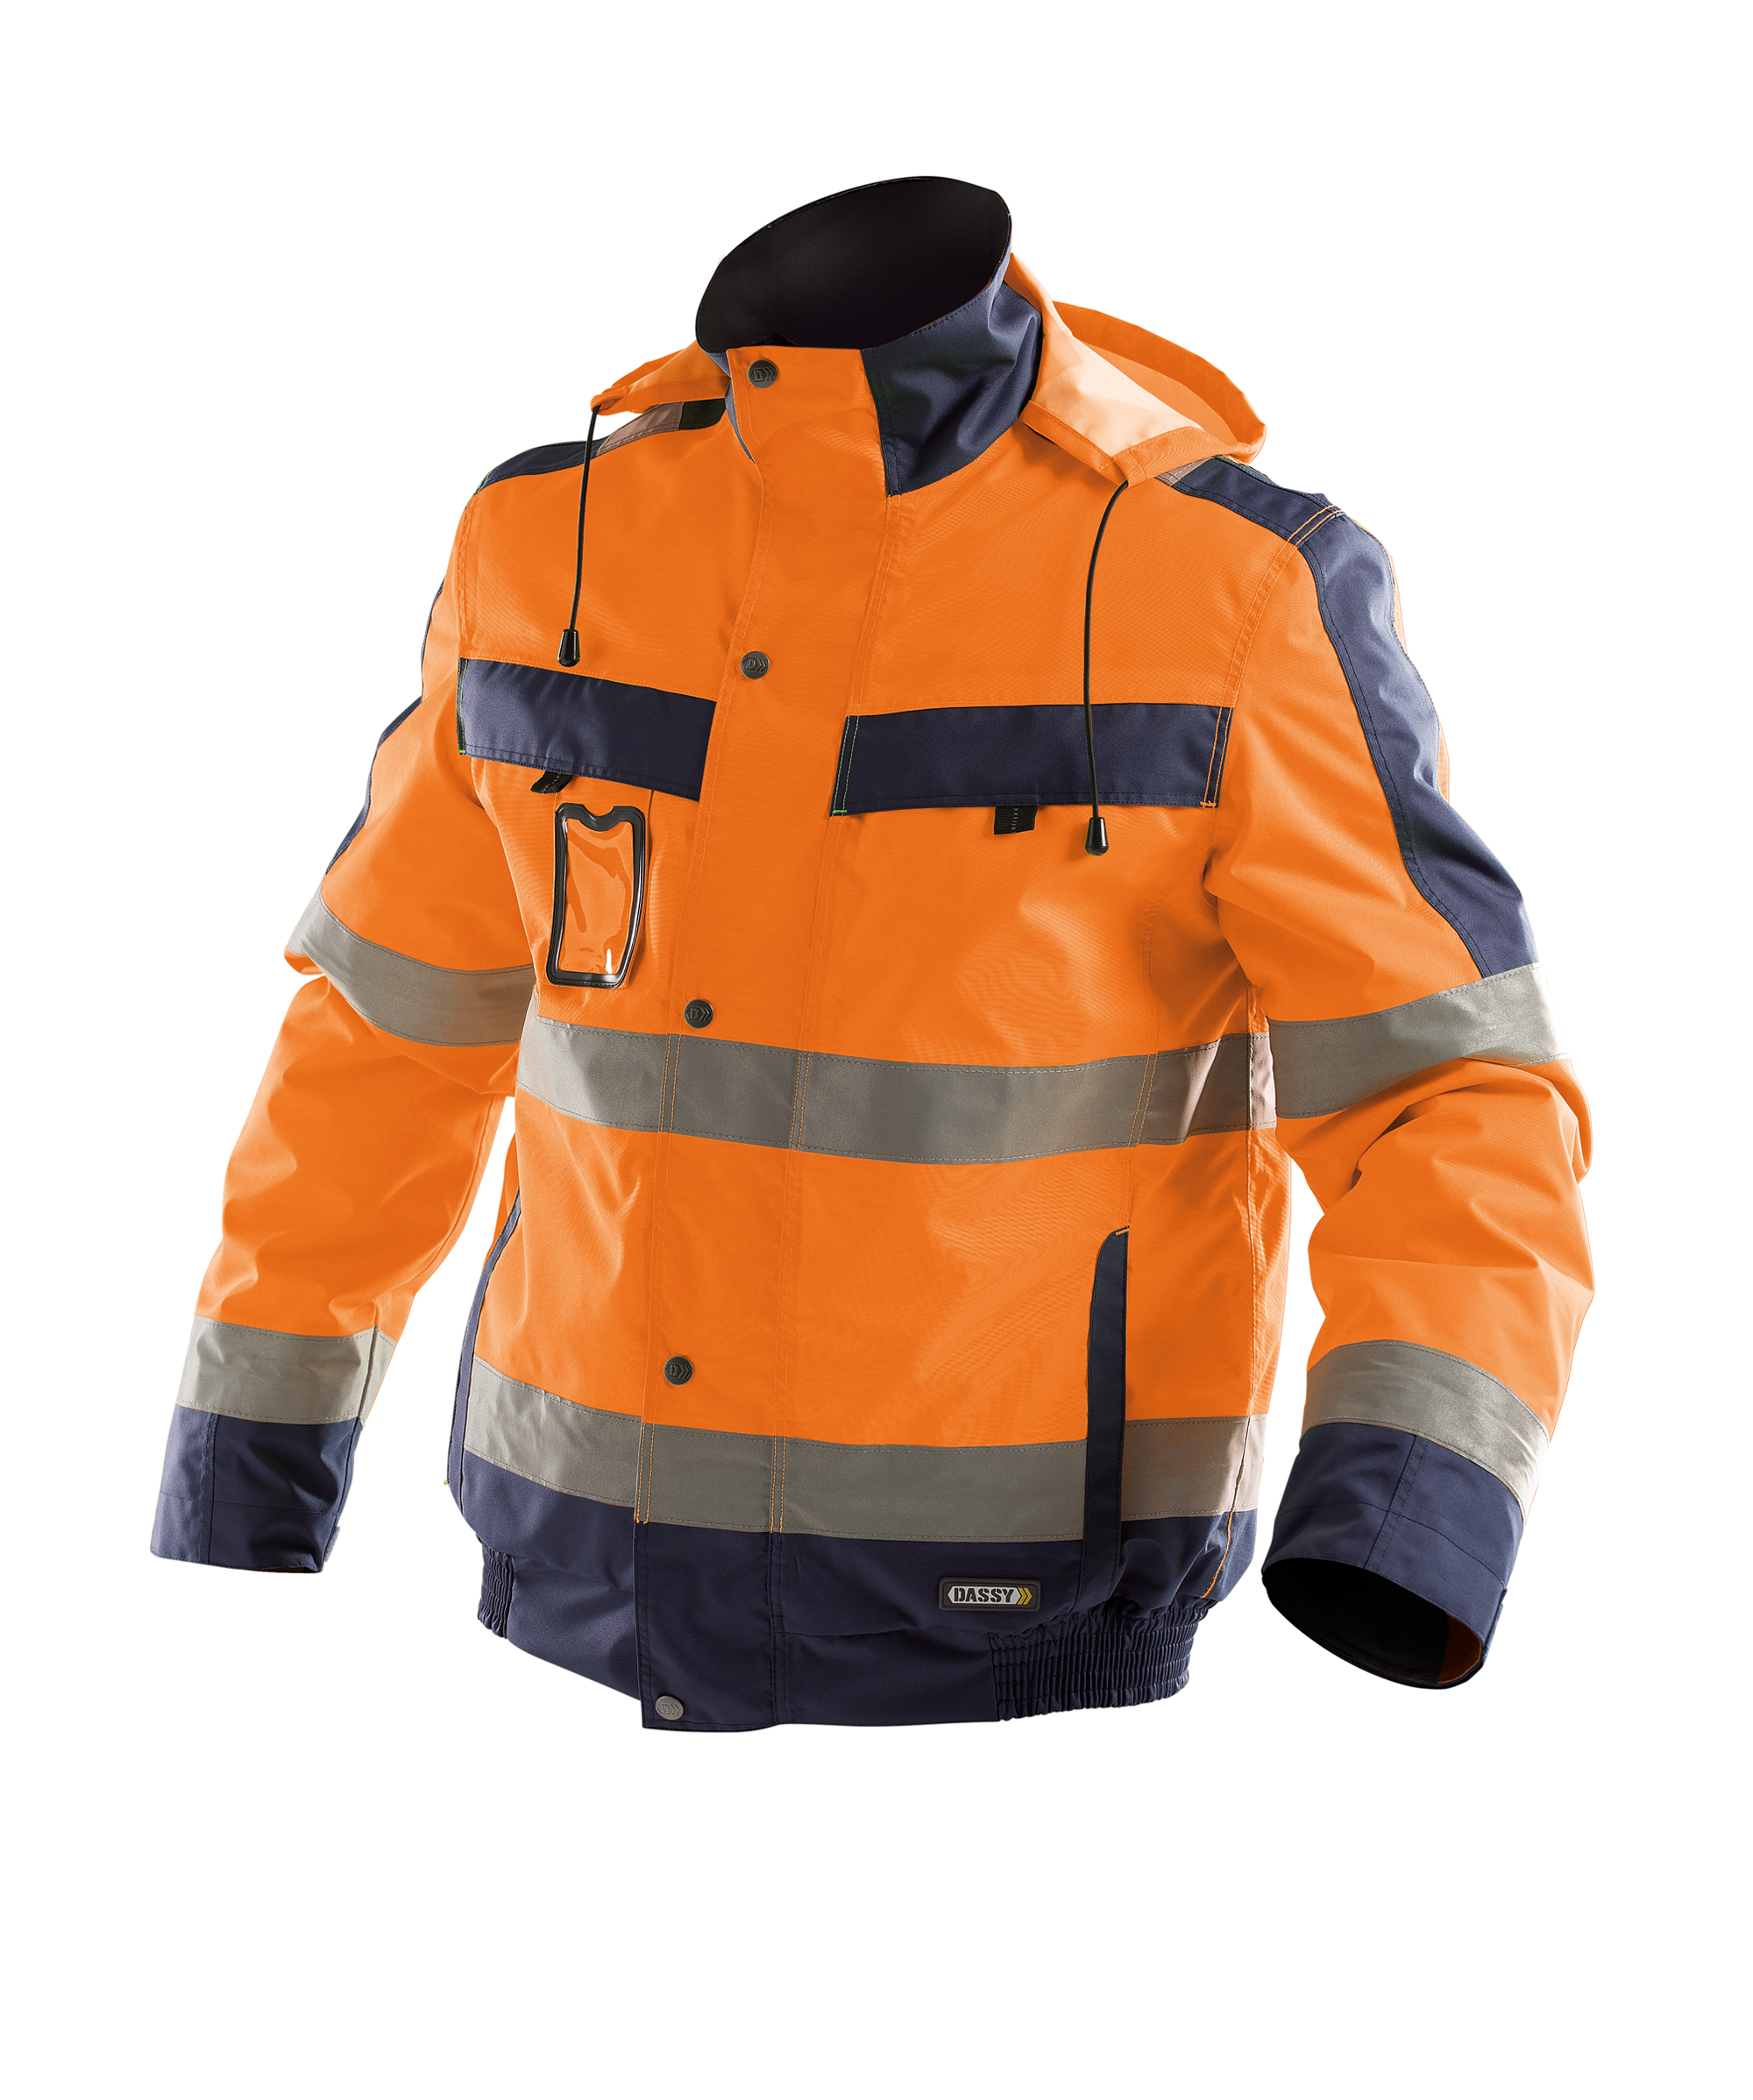 lima_high-visibility-winter-jacket_fluo-orange-navy_front.jpg